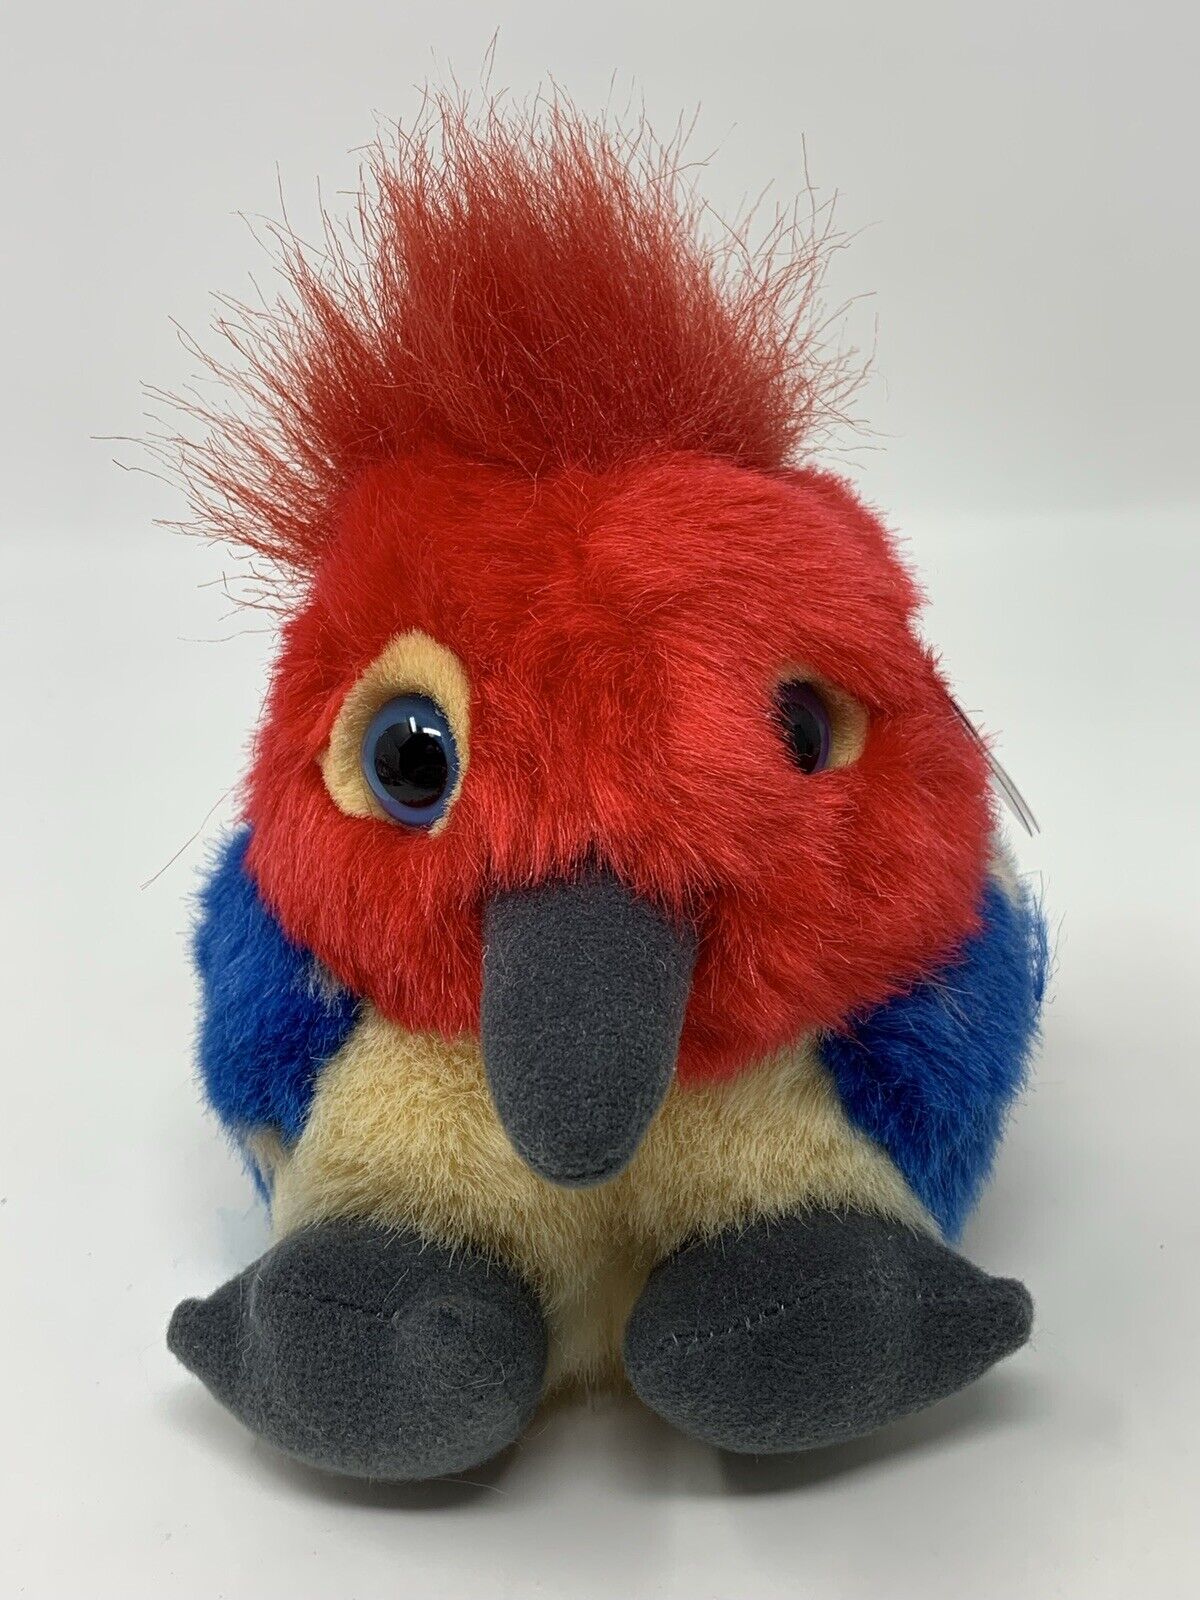 Puffkins Woodrow Woodpecker Bird Bean Bag Plush Stuffed Animal Toy Swibco 5”